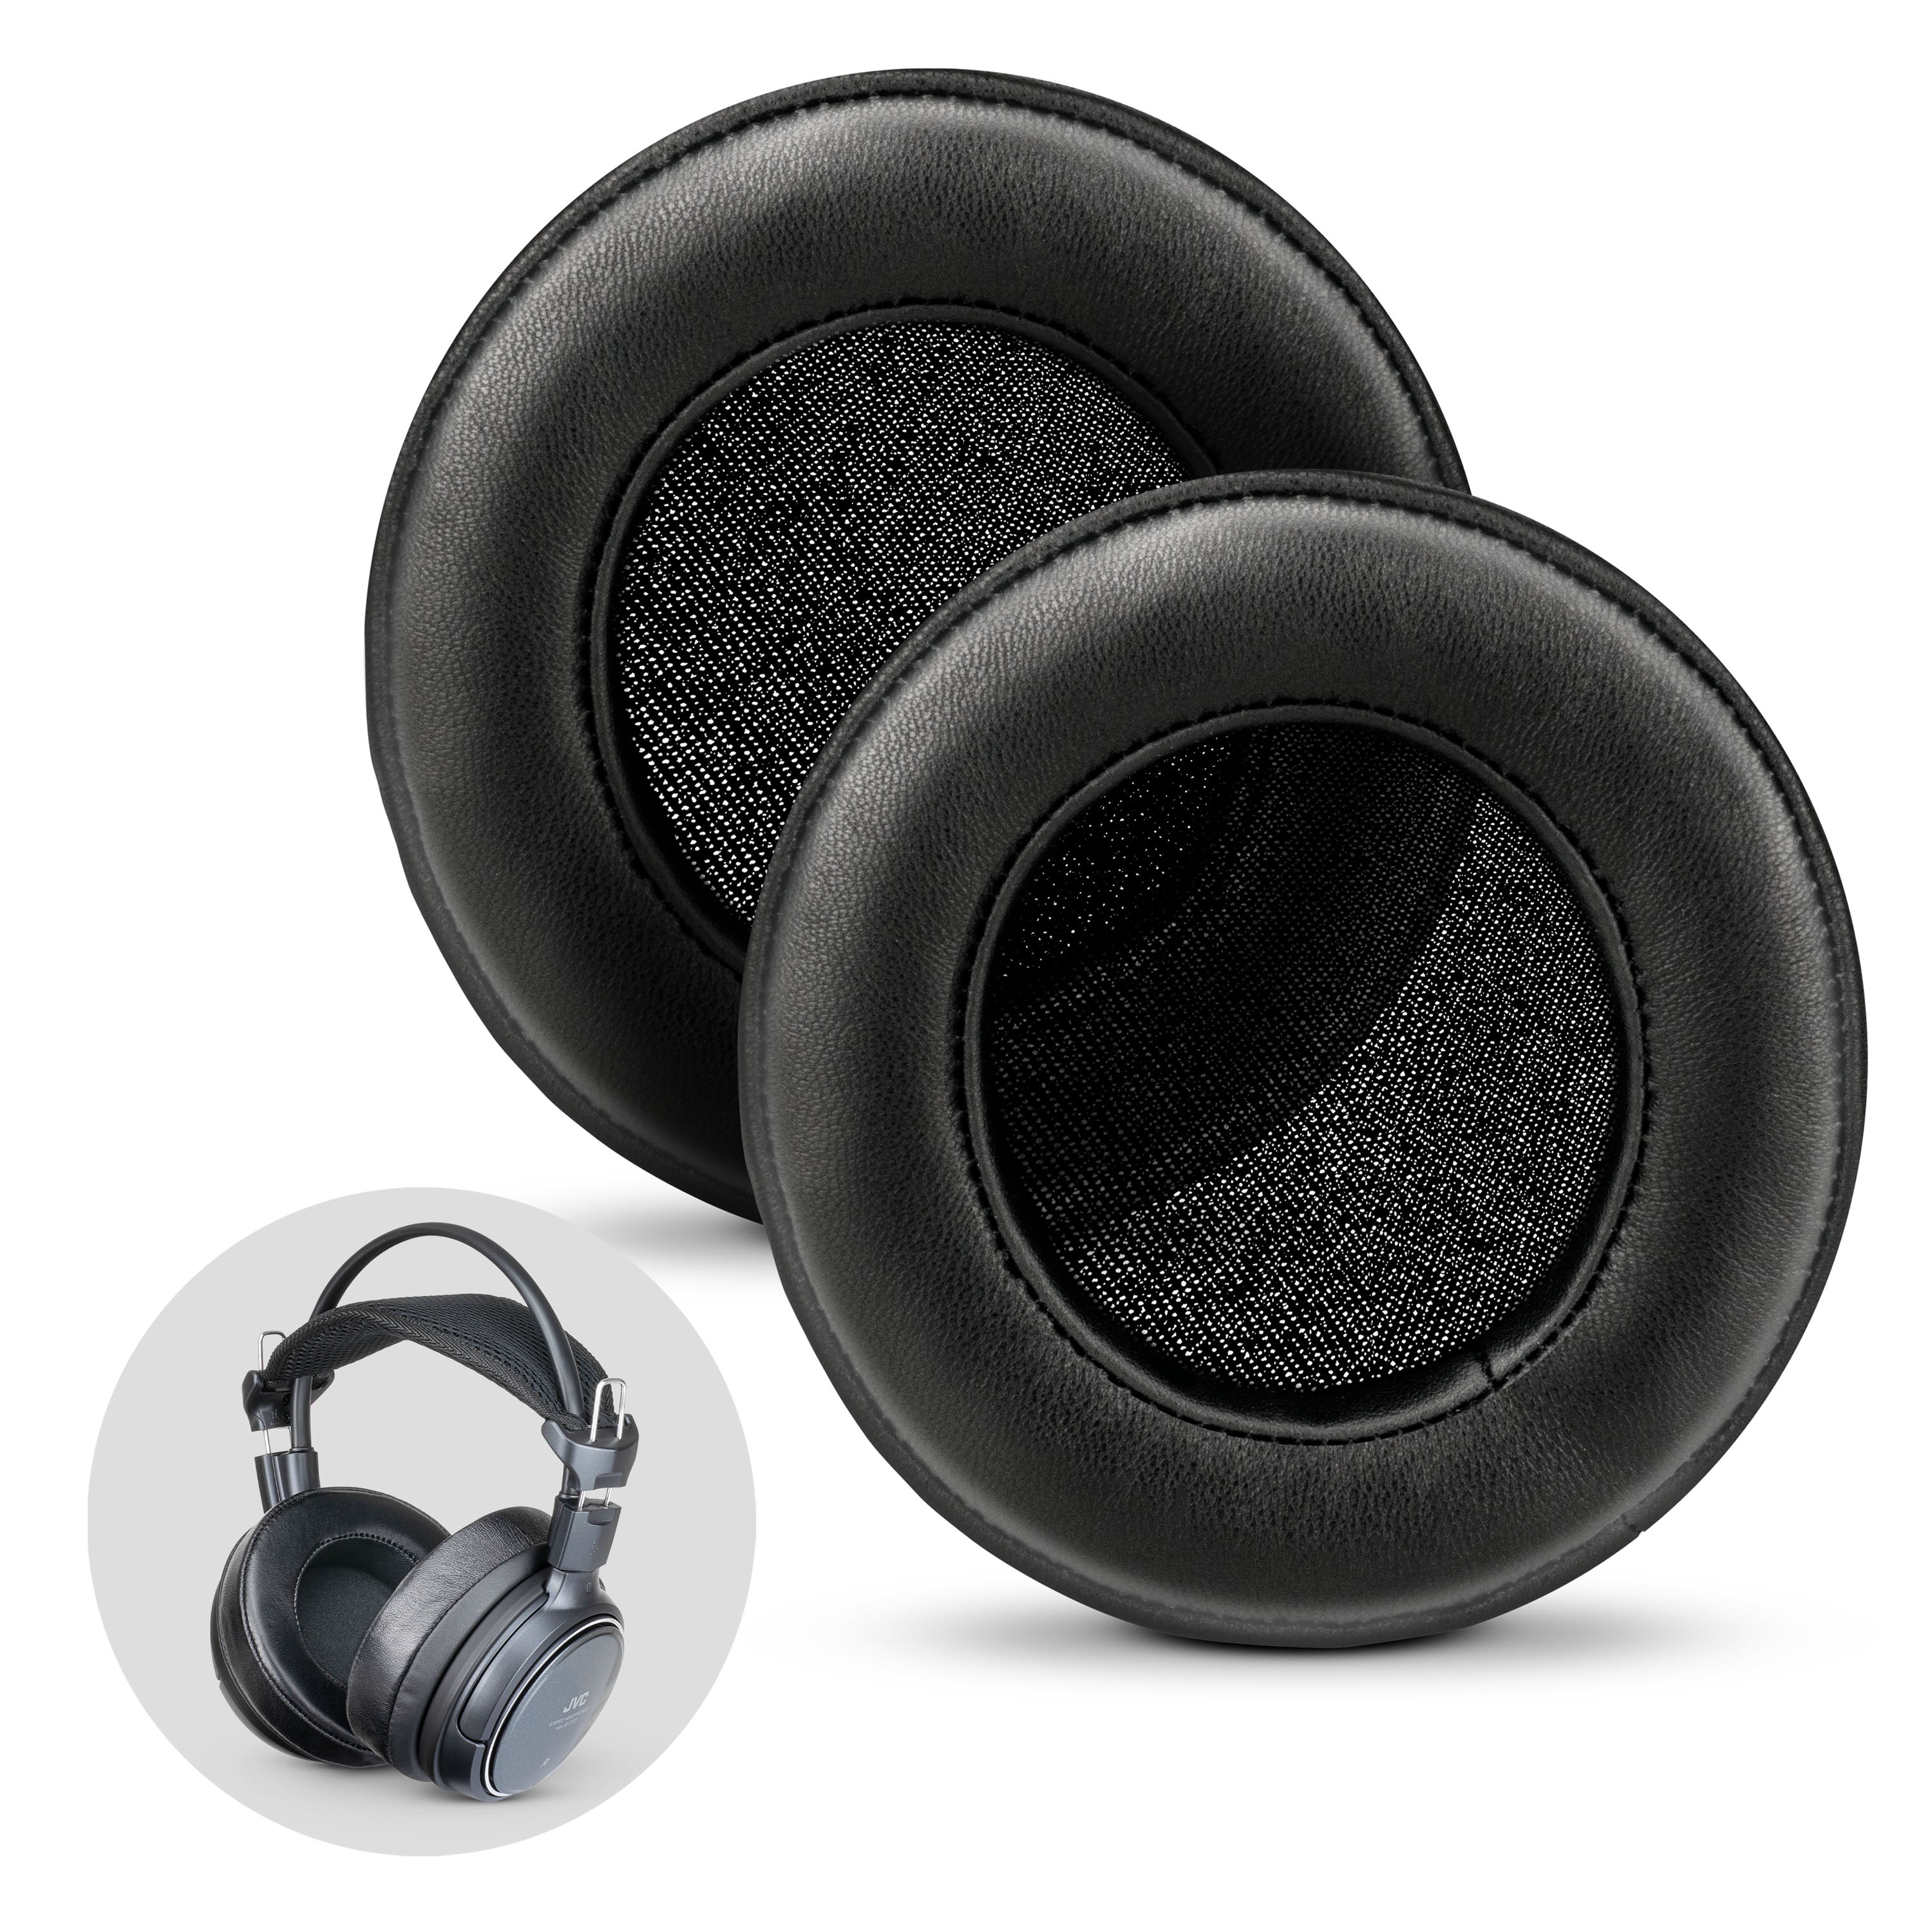 Headphone Memory Foam Earpads - XL Size - Sheepskin - Brainwavz Audio